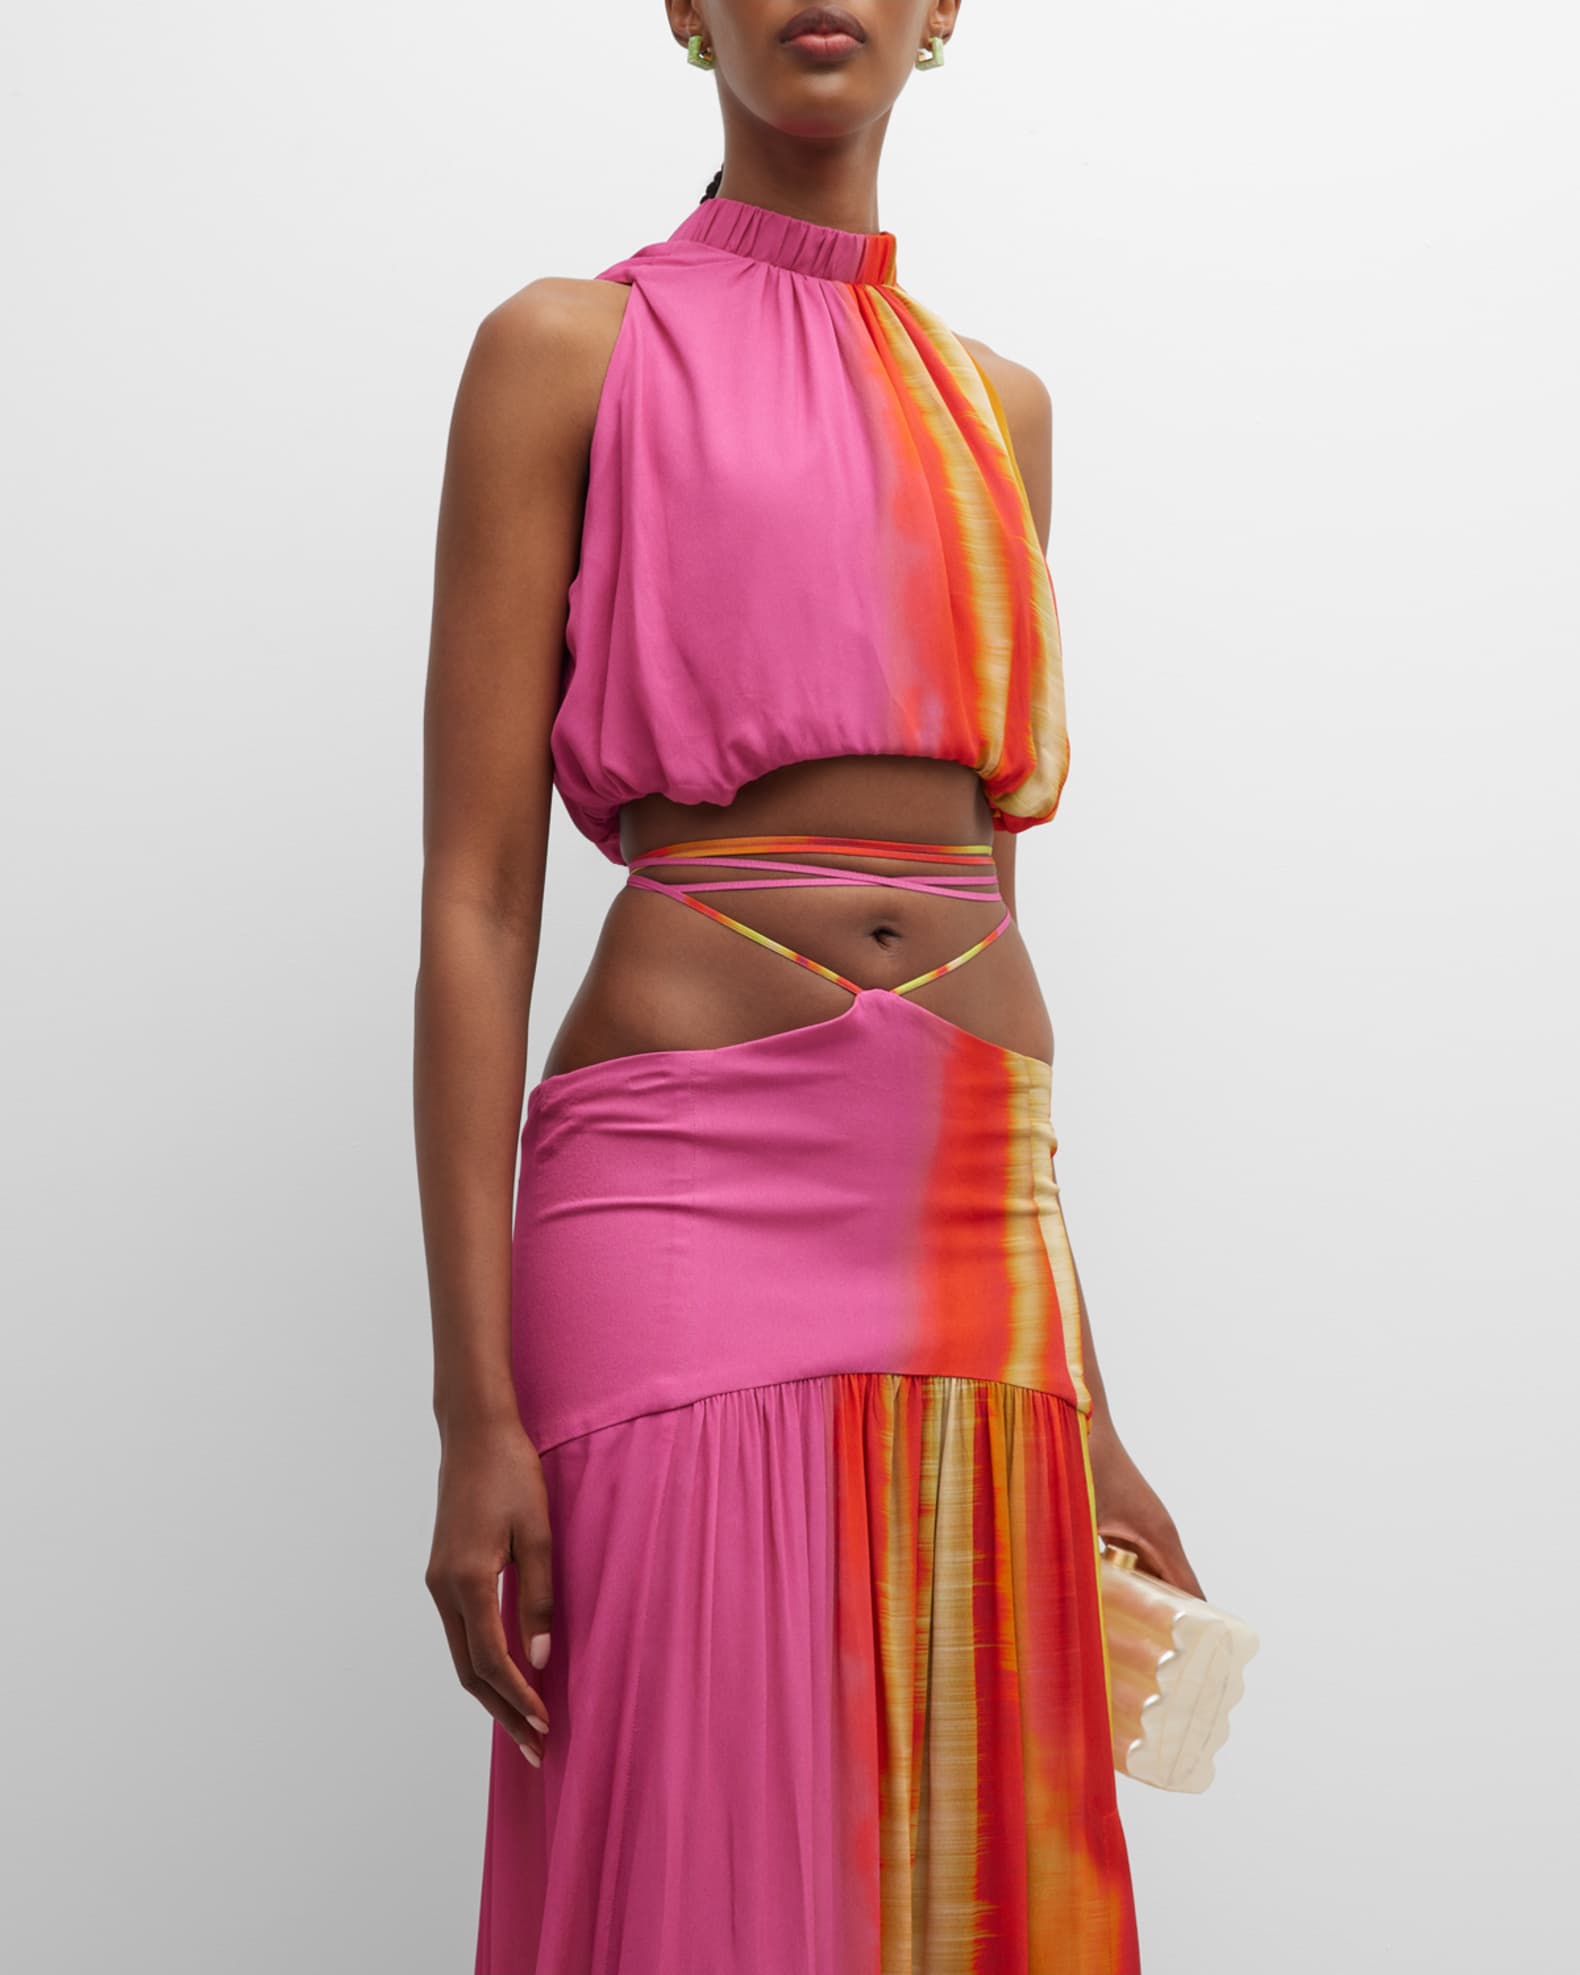 Silvia Tcherassi Leire Dyed Ombre Blouse | Neiman Marcus